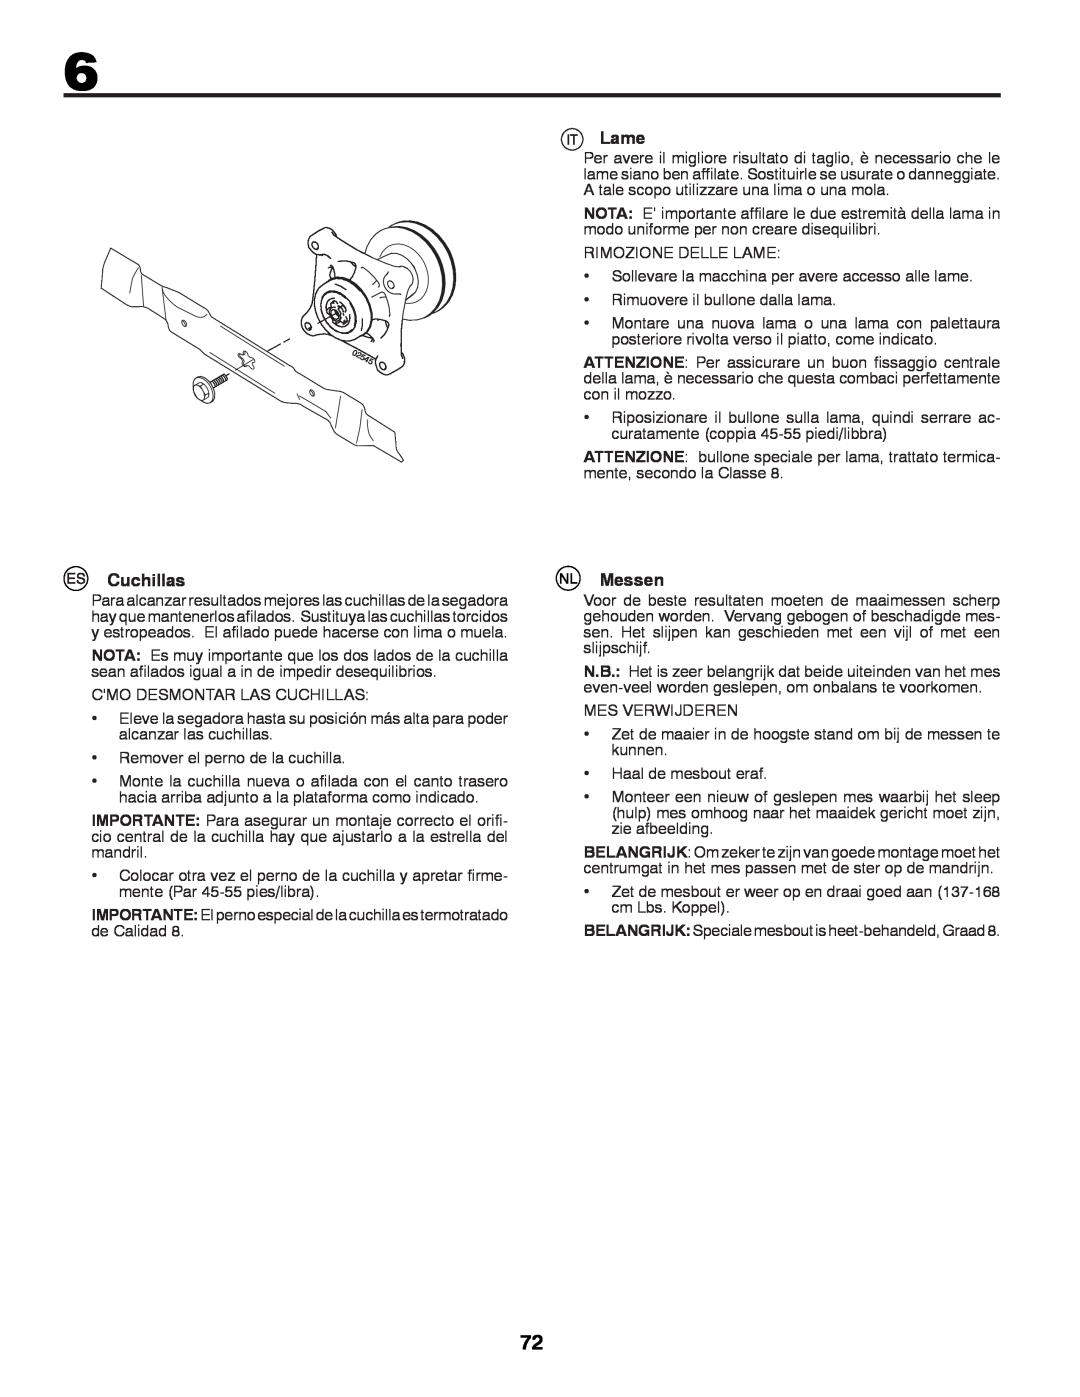 McCulloch M11577RB, 96041012300 instruction manual Cuchillas, Lame, Messen 